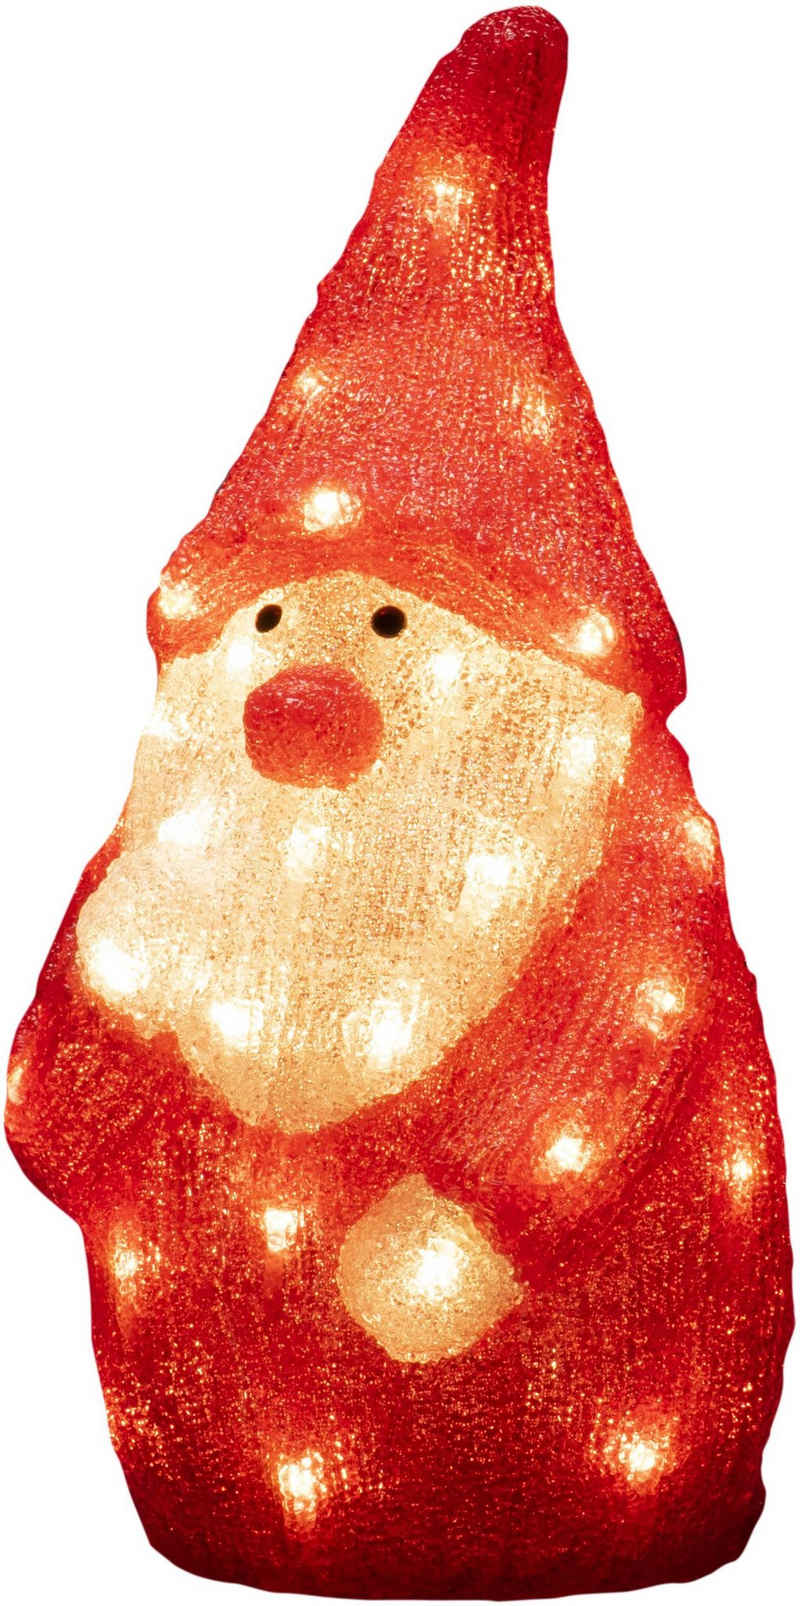 KONSTSMIDE LED Dekofigur LED Acryl Weihnachtsmann, LED fest integriert, Warmweiß, 40 warm weiße Dioden